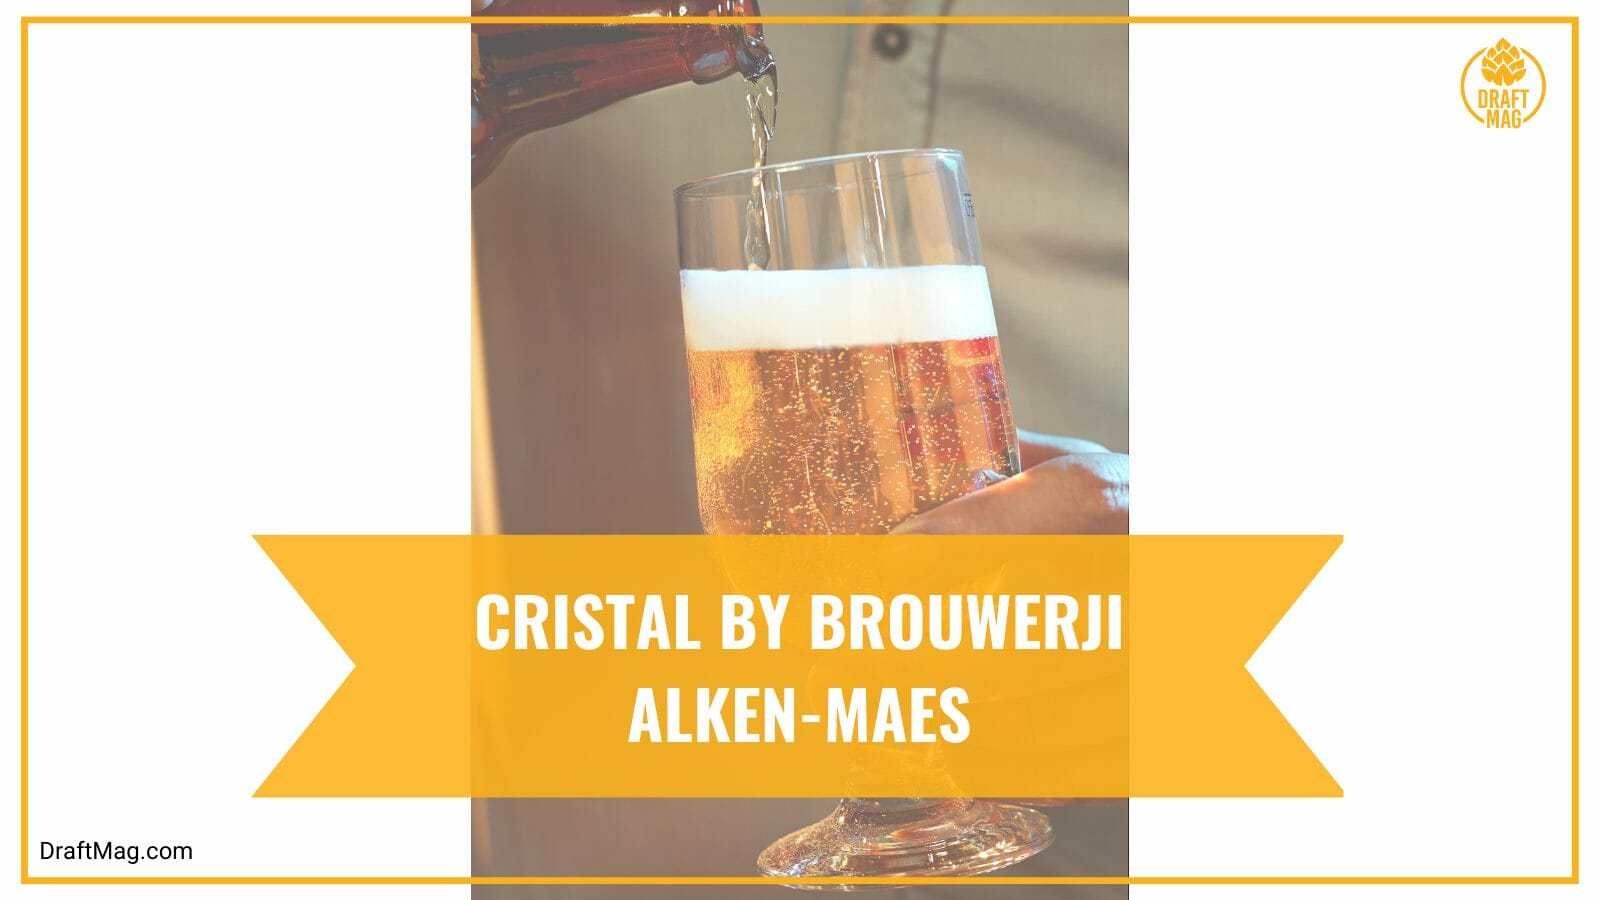 Cristal by brouwerij alkenmaes